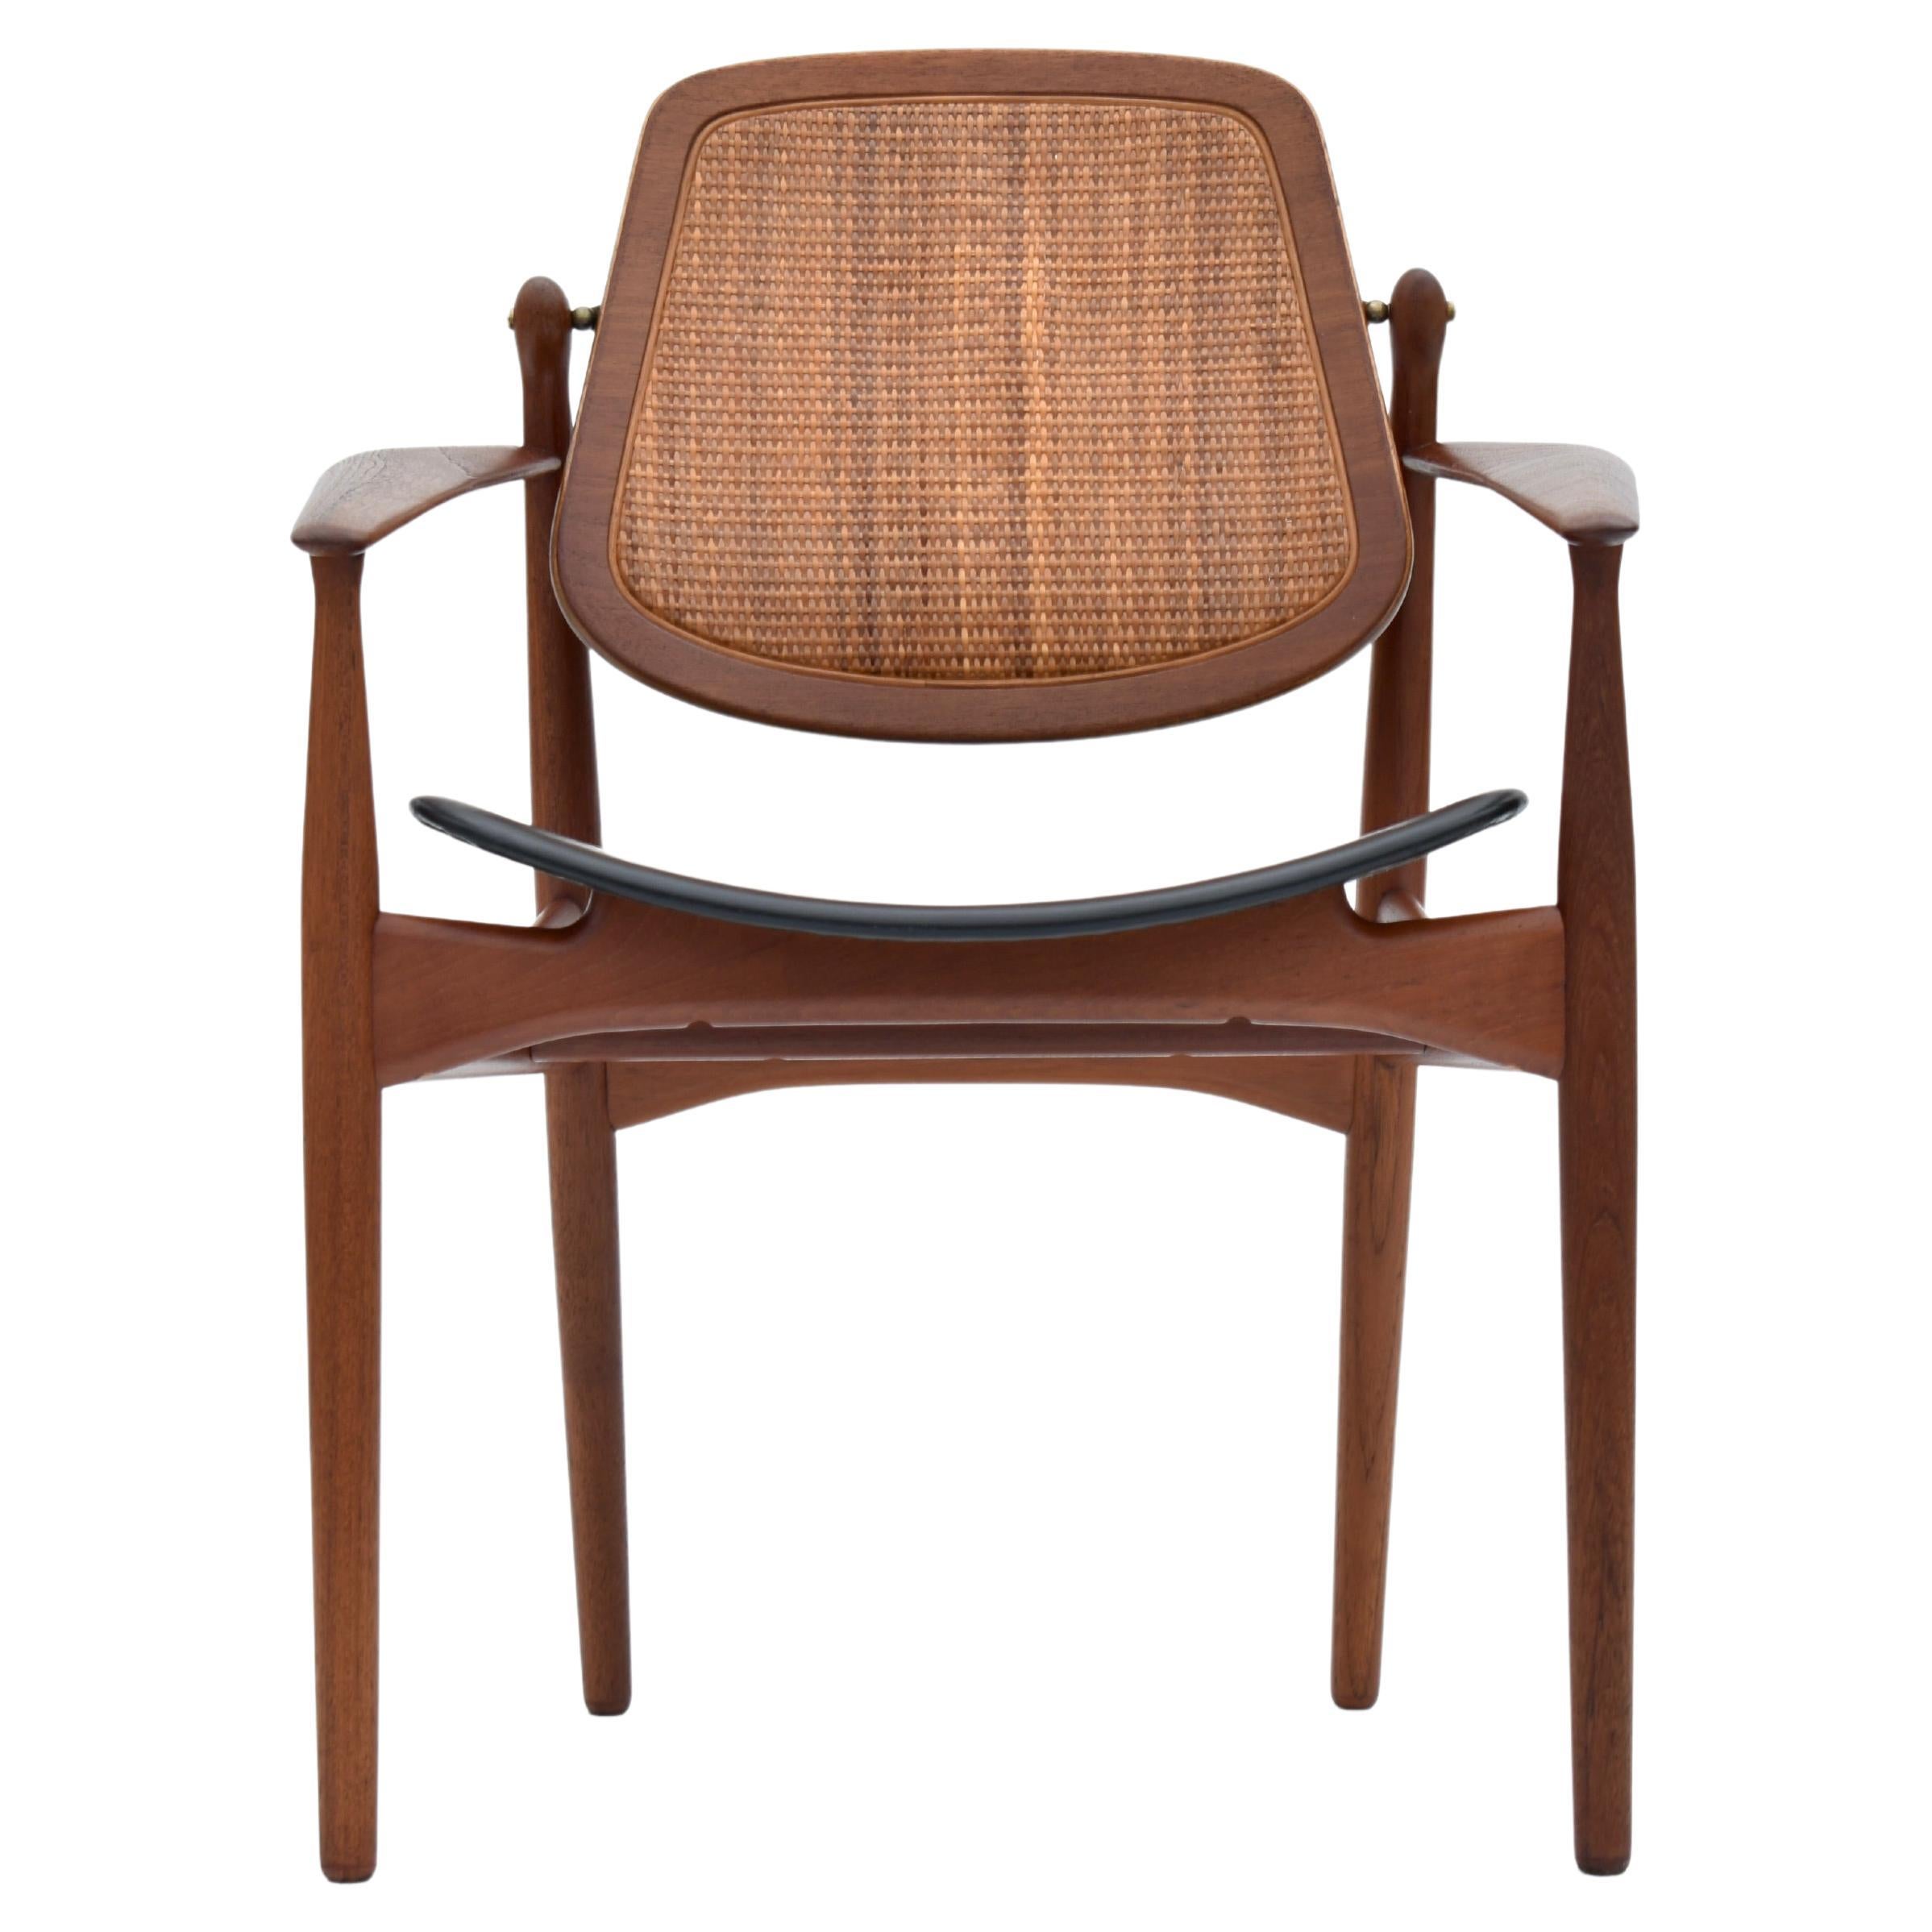 Arne Vodder Modell 186 Stuhl aus Teakholz, Rattan und Leder für France & Son, Dänemark